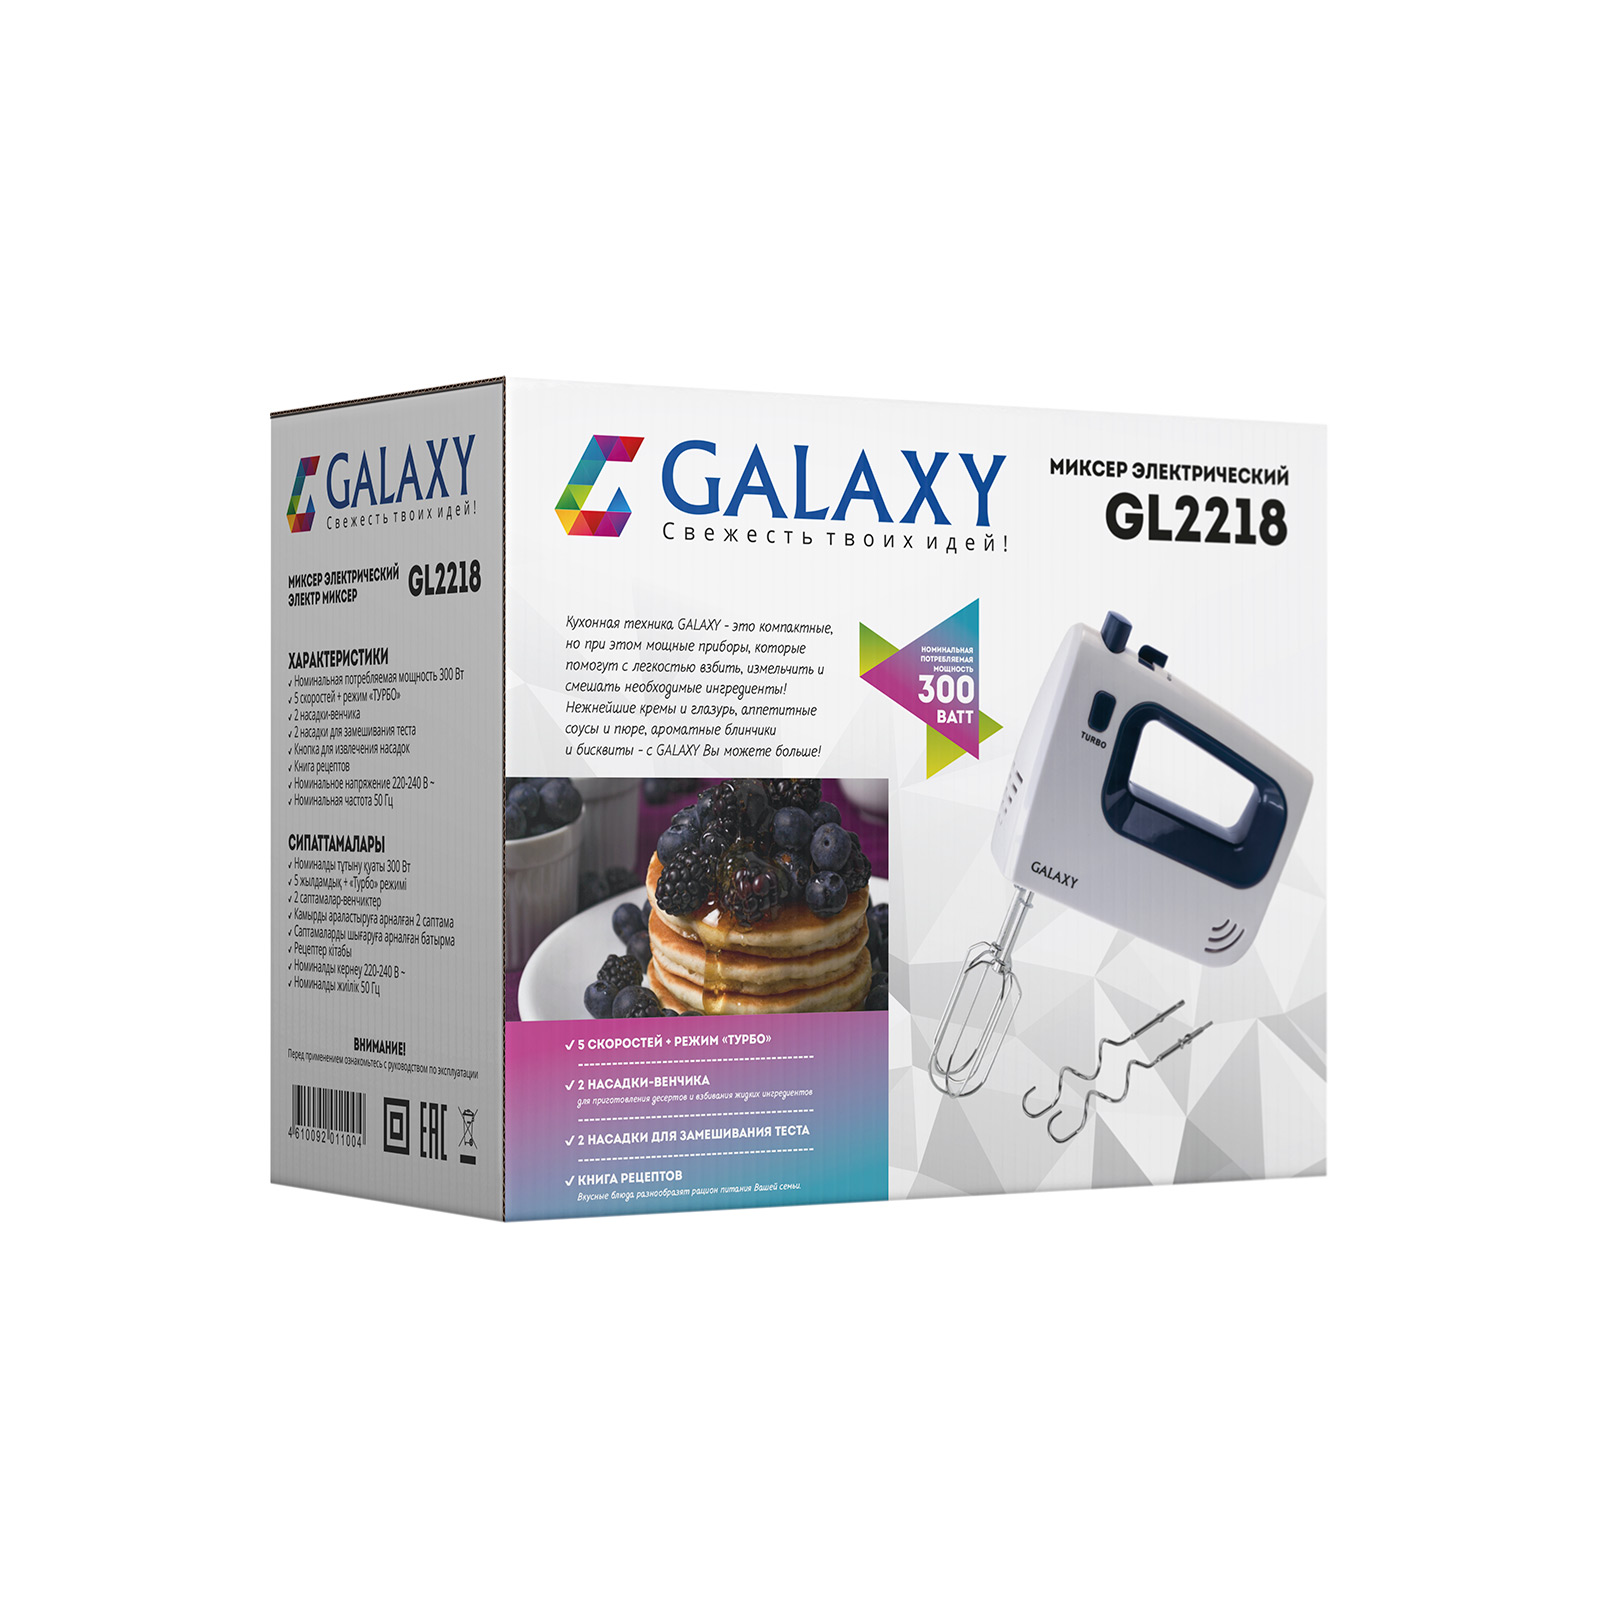 Миксер ручной Galaxy GL2218 300Вт, белый/синий (GL 2218), цвет белый/синий - фото 1